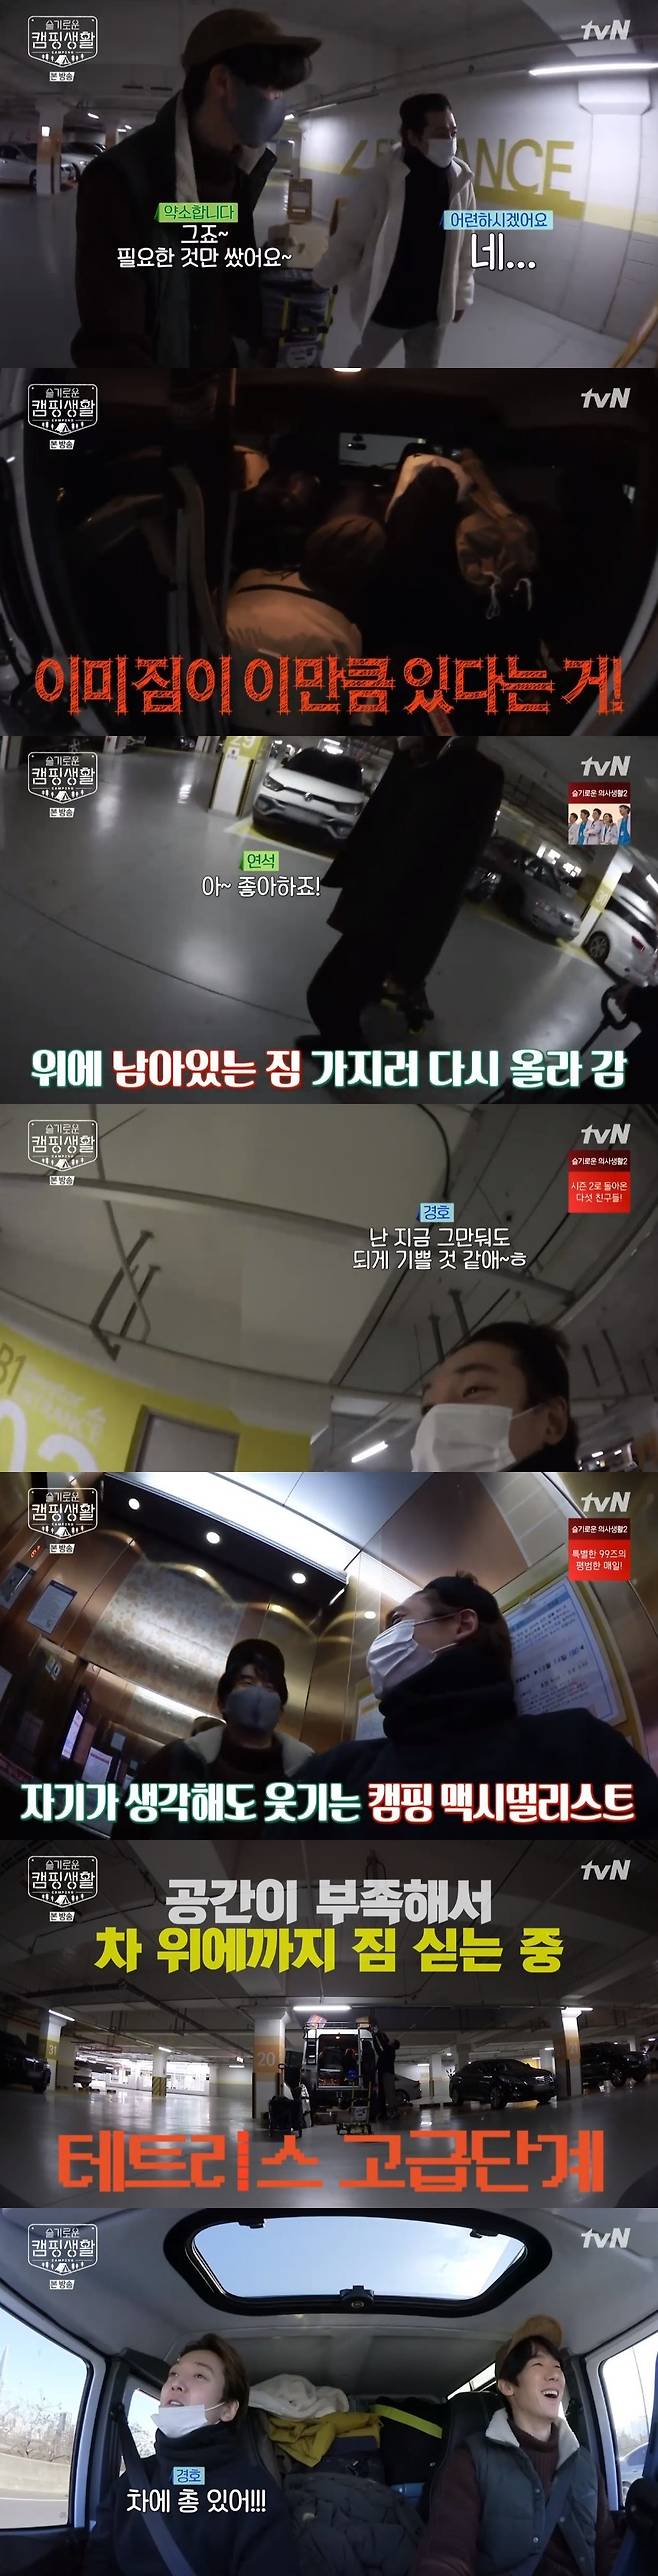 tvN '슬기로운 캠핑생활' 캡처 © 뉴스1